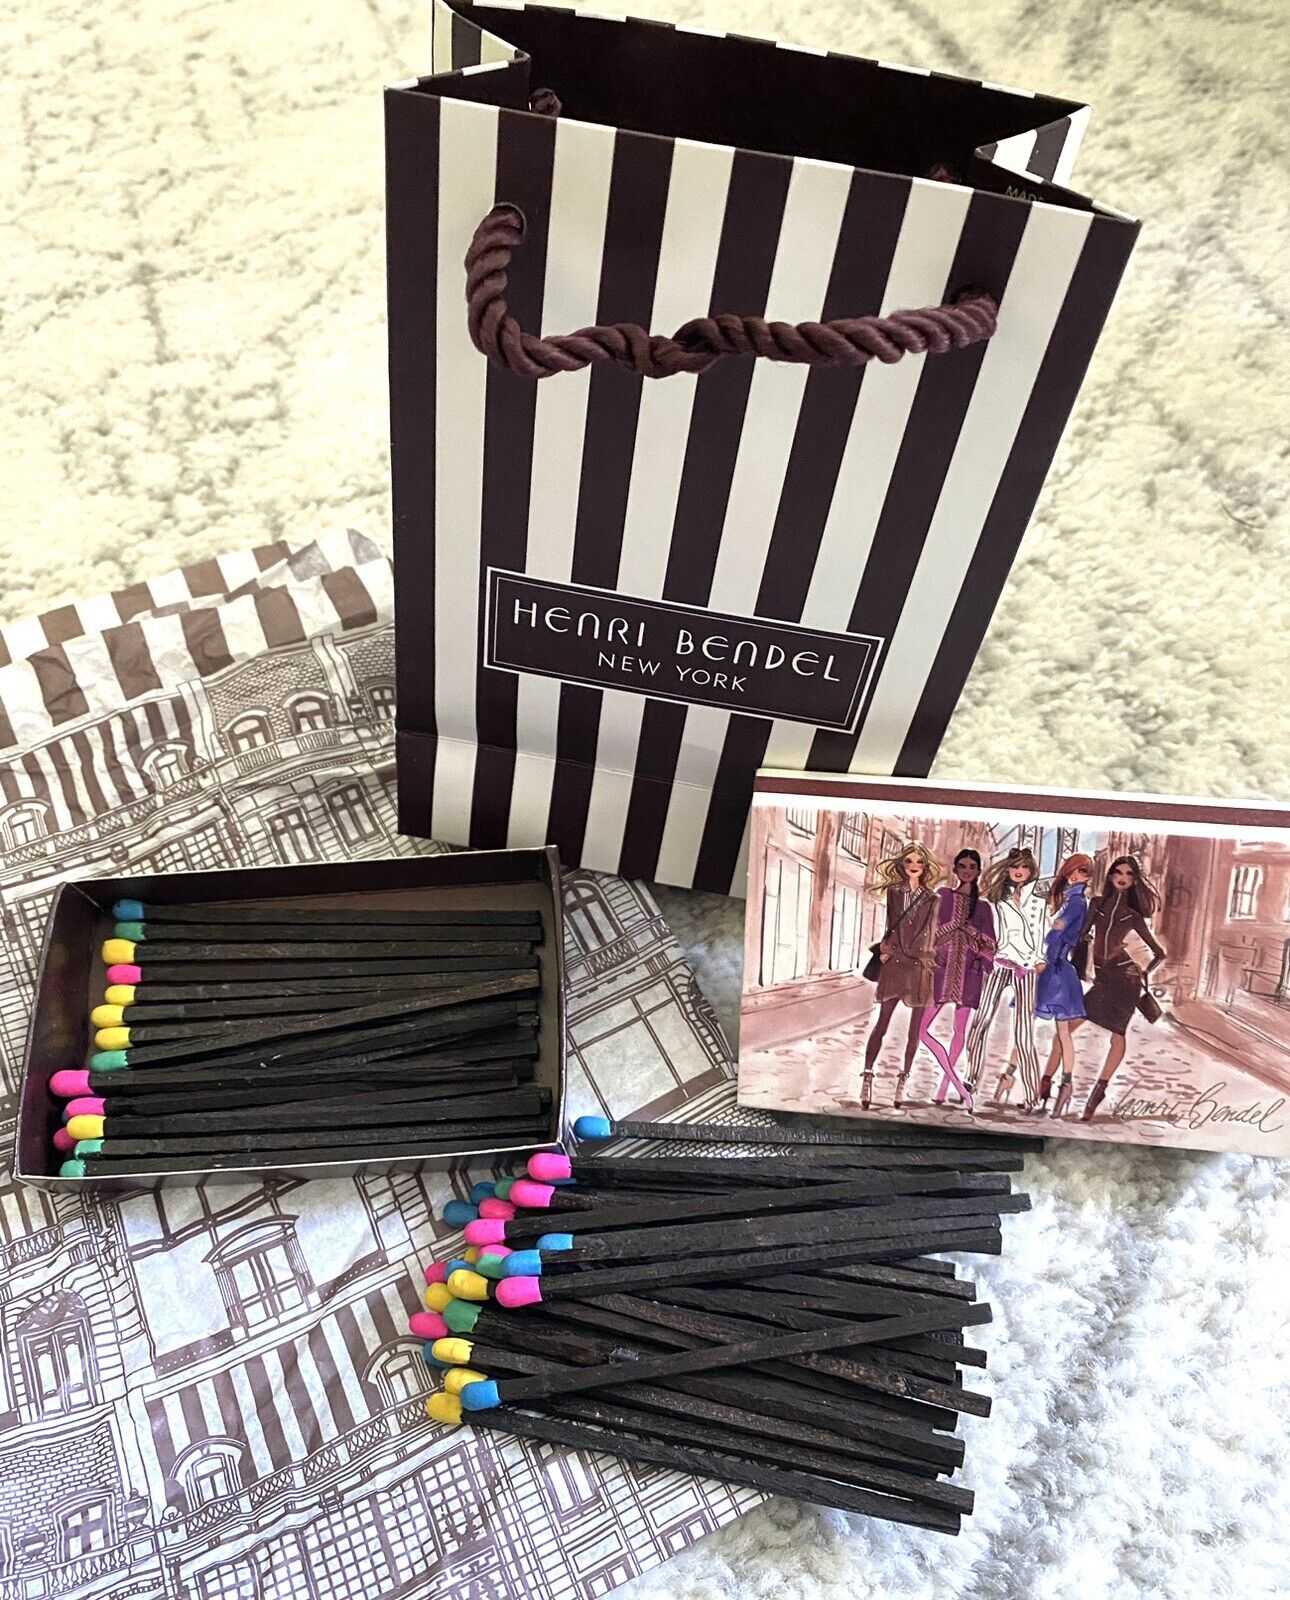 Henri Bendel Izod Girls Iconic Matches + Gift Bag +Tissue Paper Match Box